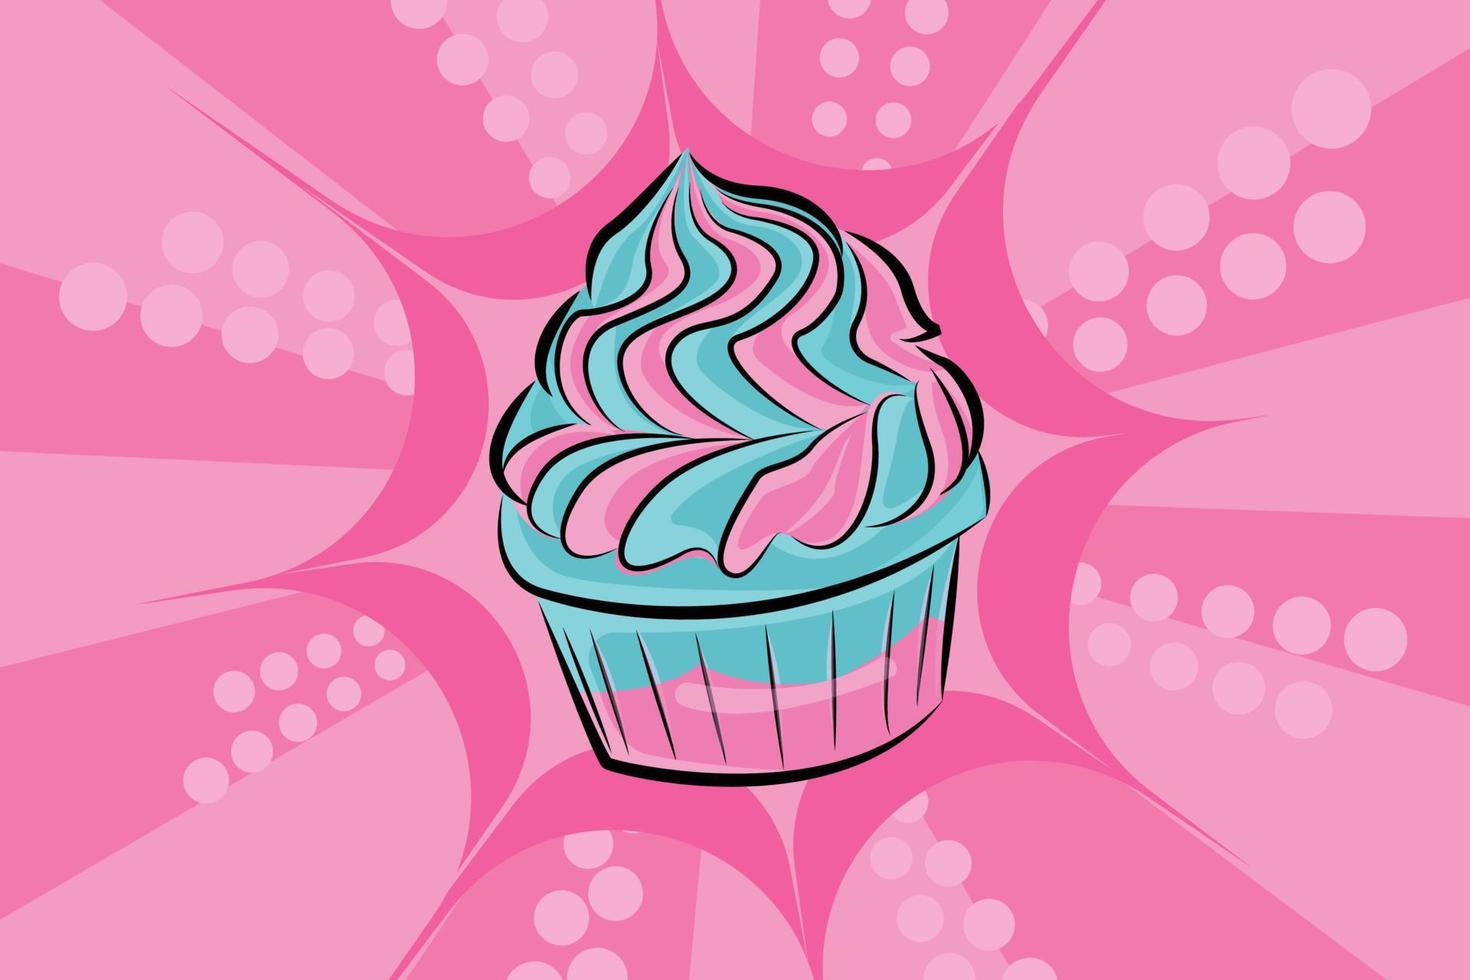 dibujos animados de cupcakes dulces con fondo rosa. ilustración vectorial vector